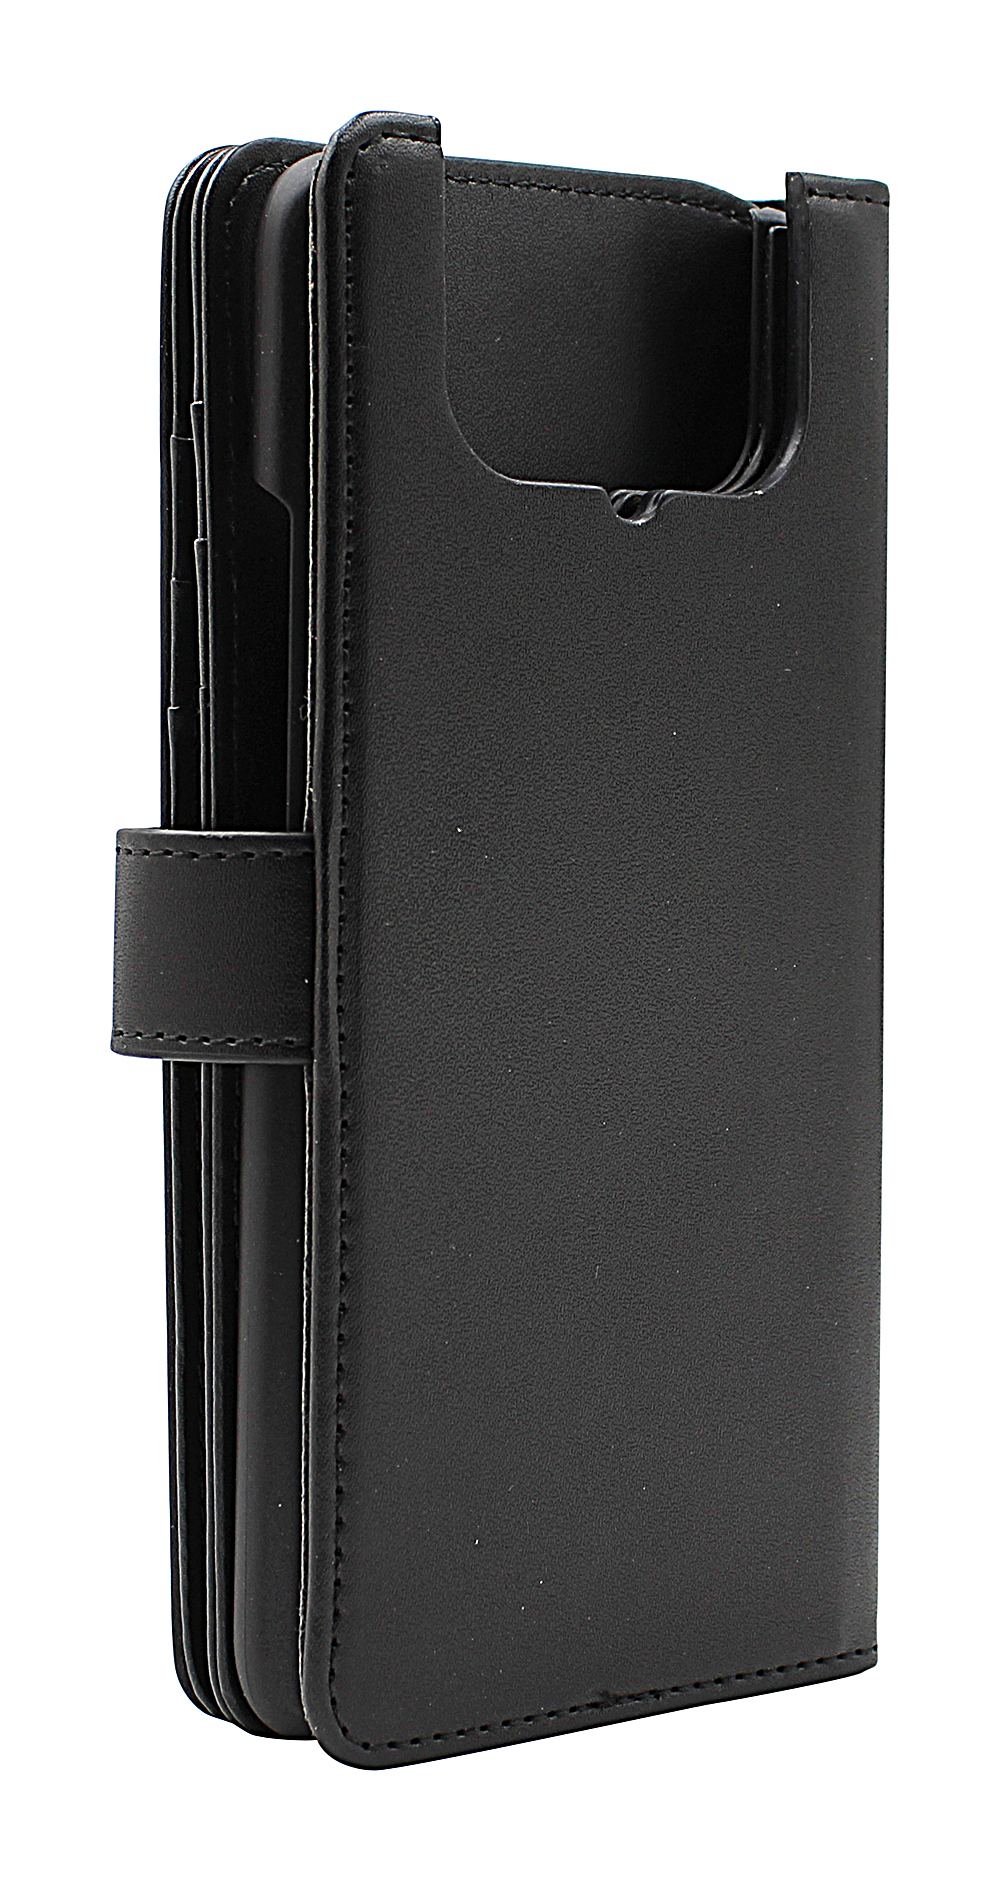 Skimblocker XL Magnet Wallet Asus ZenFone 7 Pro (ZS671KS)